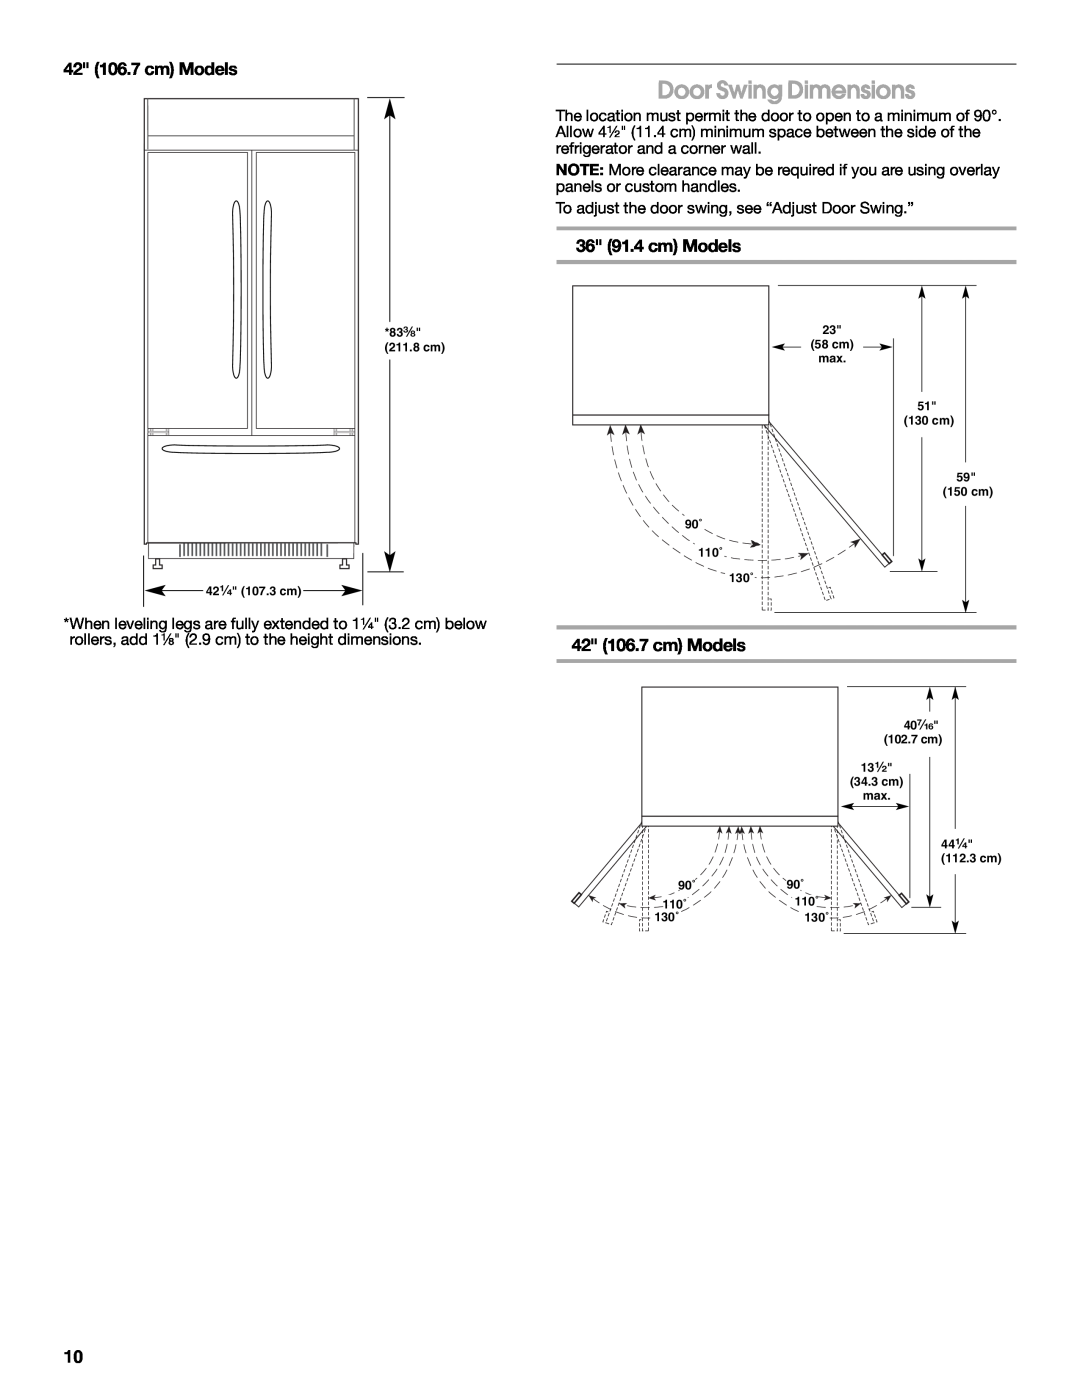 Jenn-Air W10183782A manual Door Swing Dimensions, 42 106.7 cm Models, 36 91.4 cm Models, 40⁷⁄₁₆ 